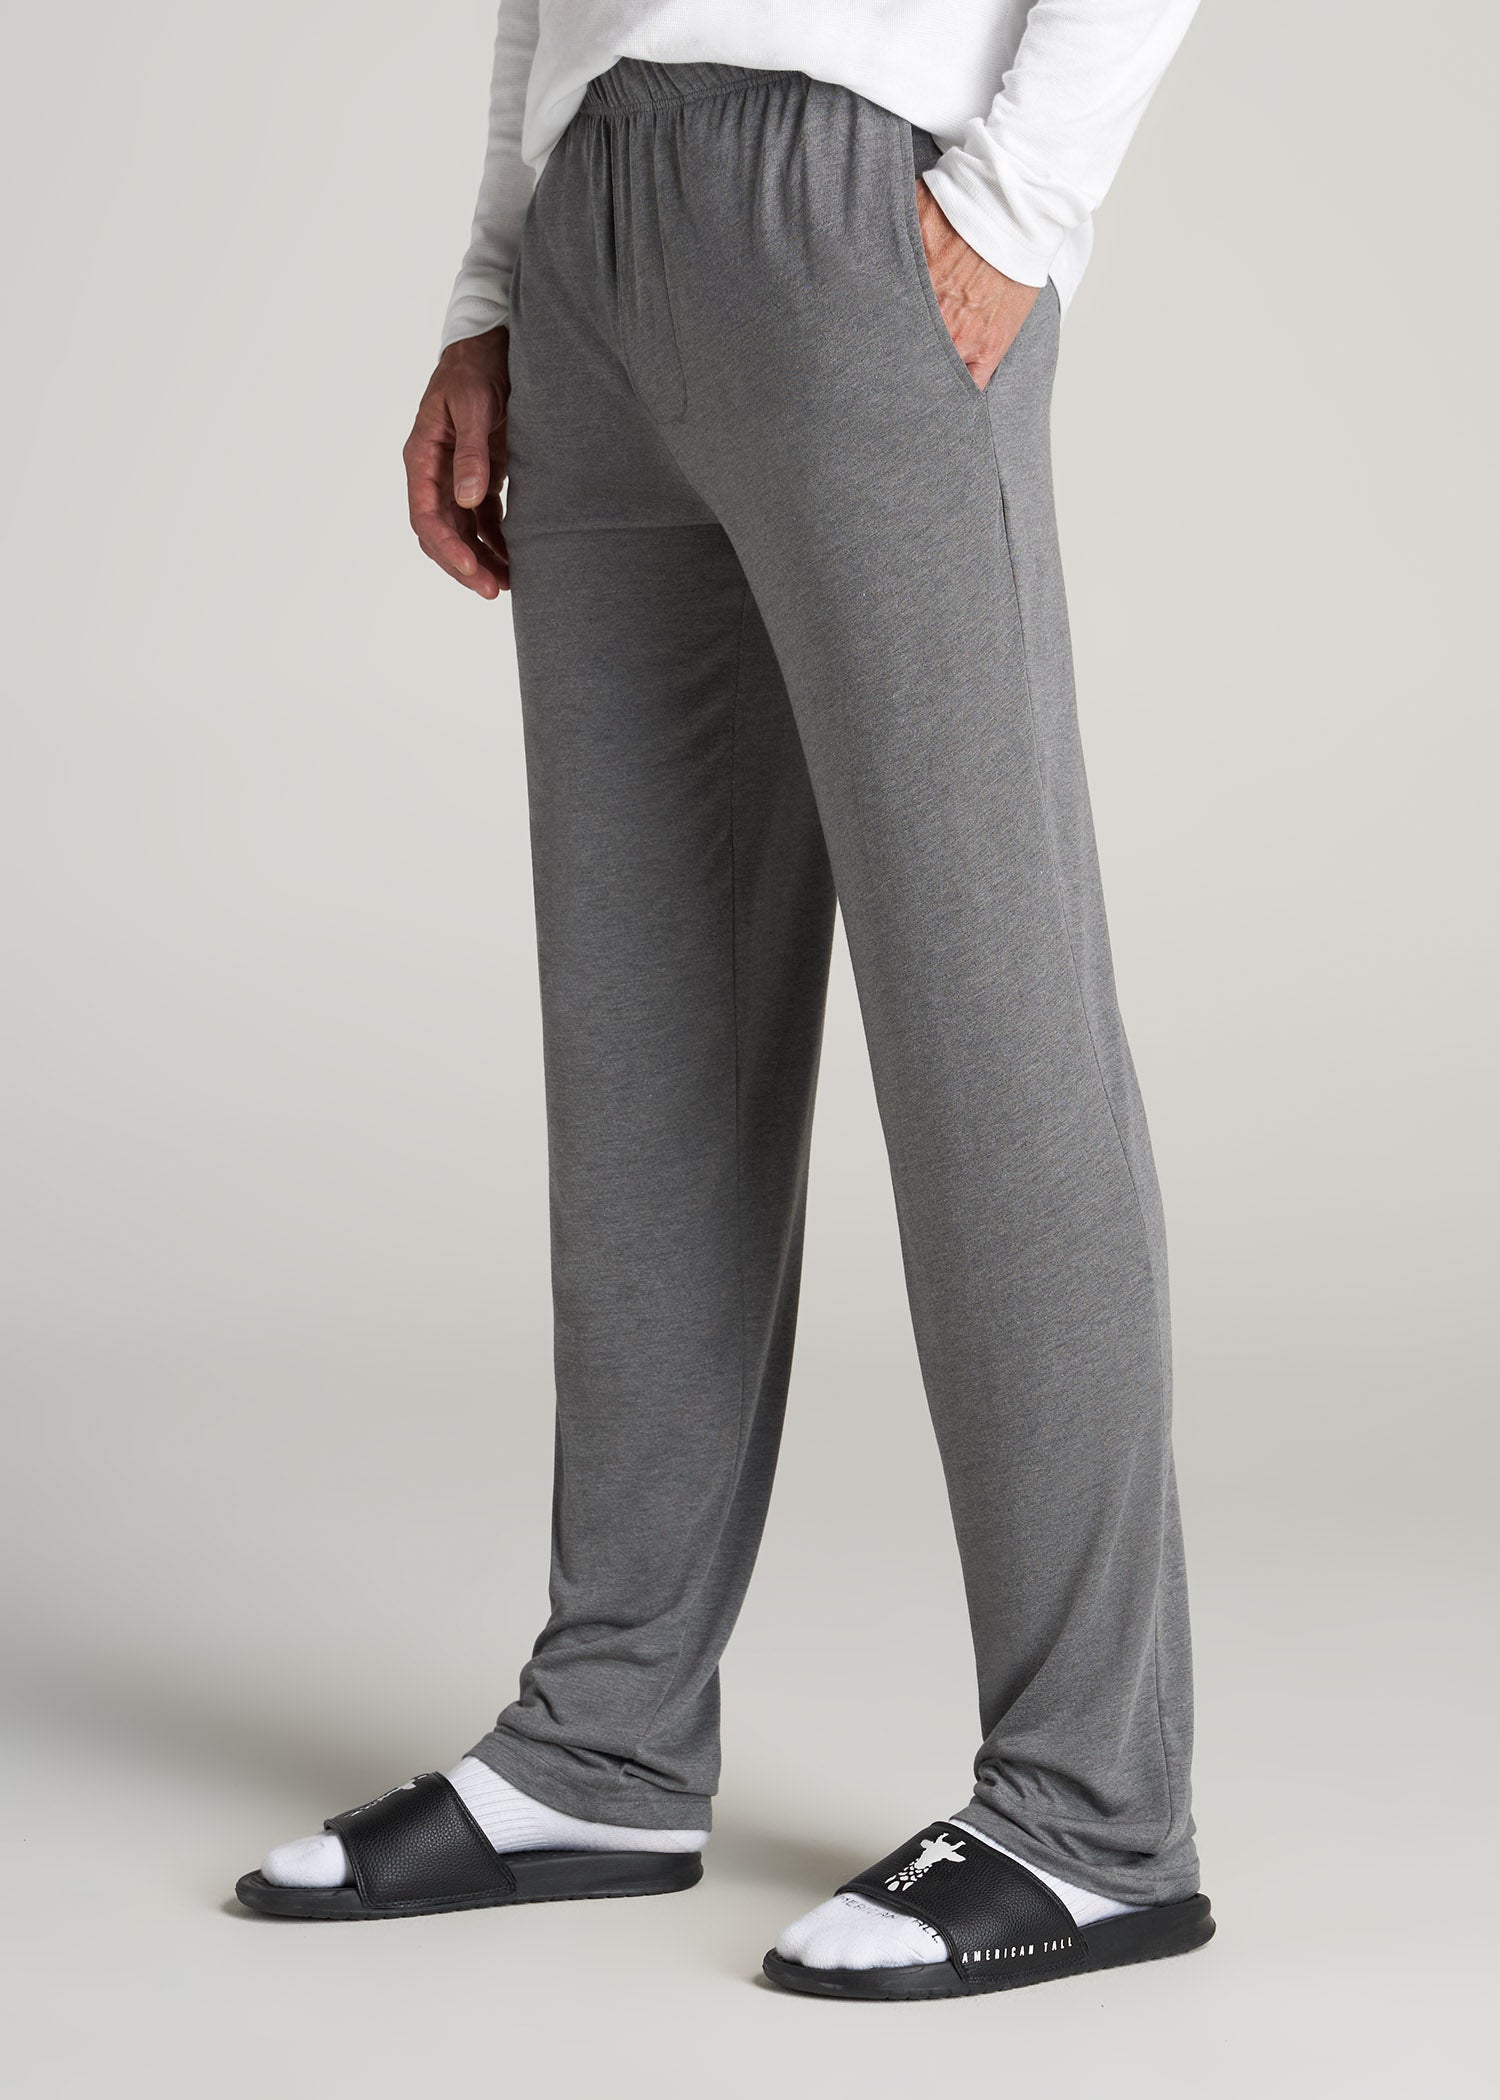 Modal Jersey Lounge Pant  Pants, Comfortable pant, Lounge pants